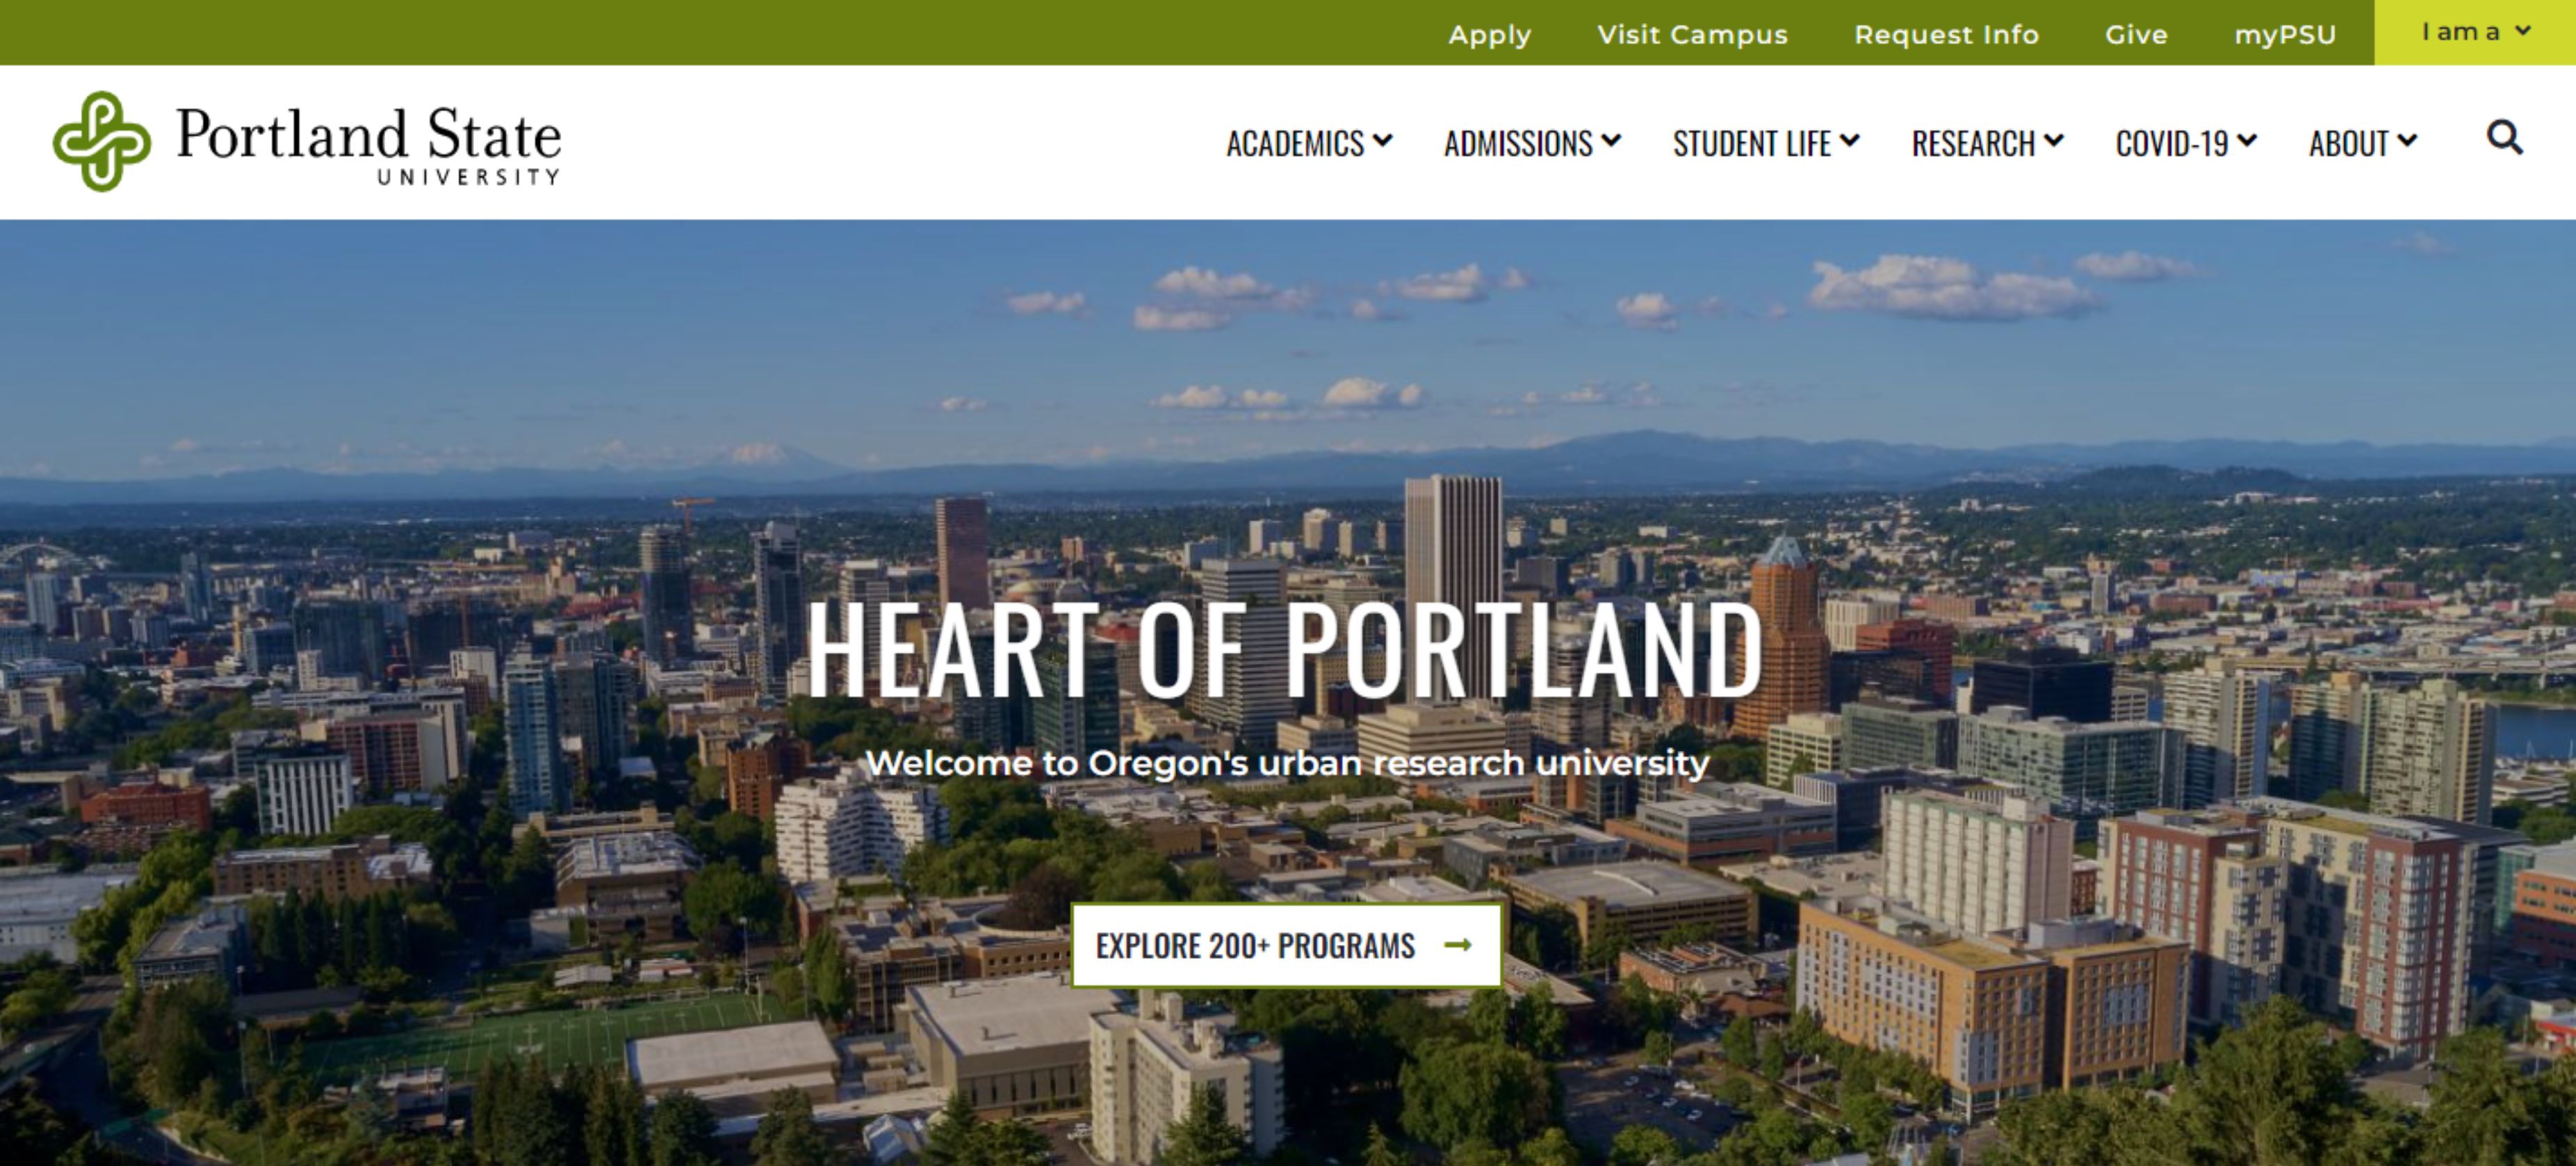 Portland State University header